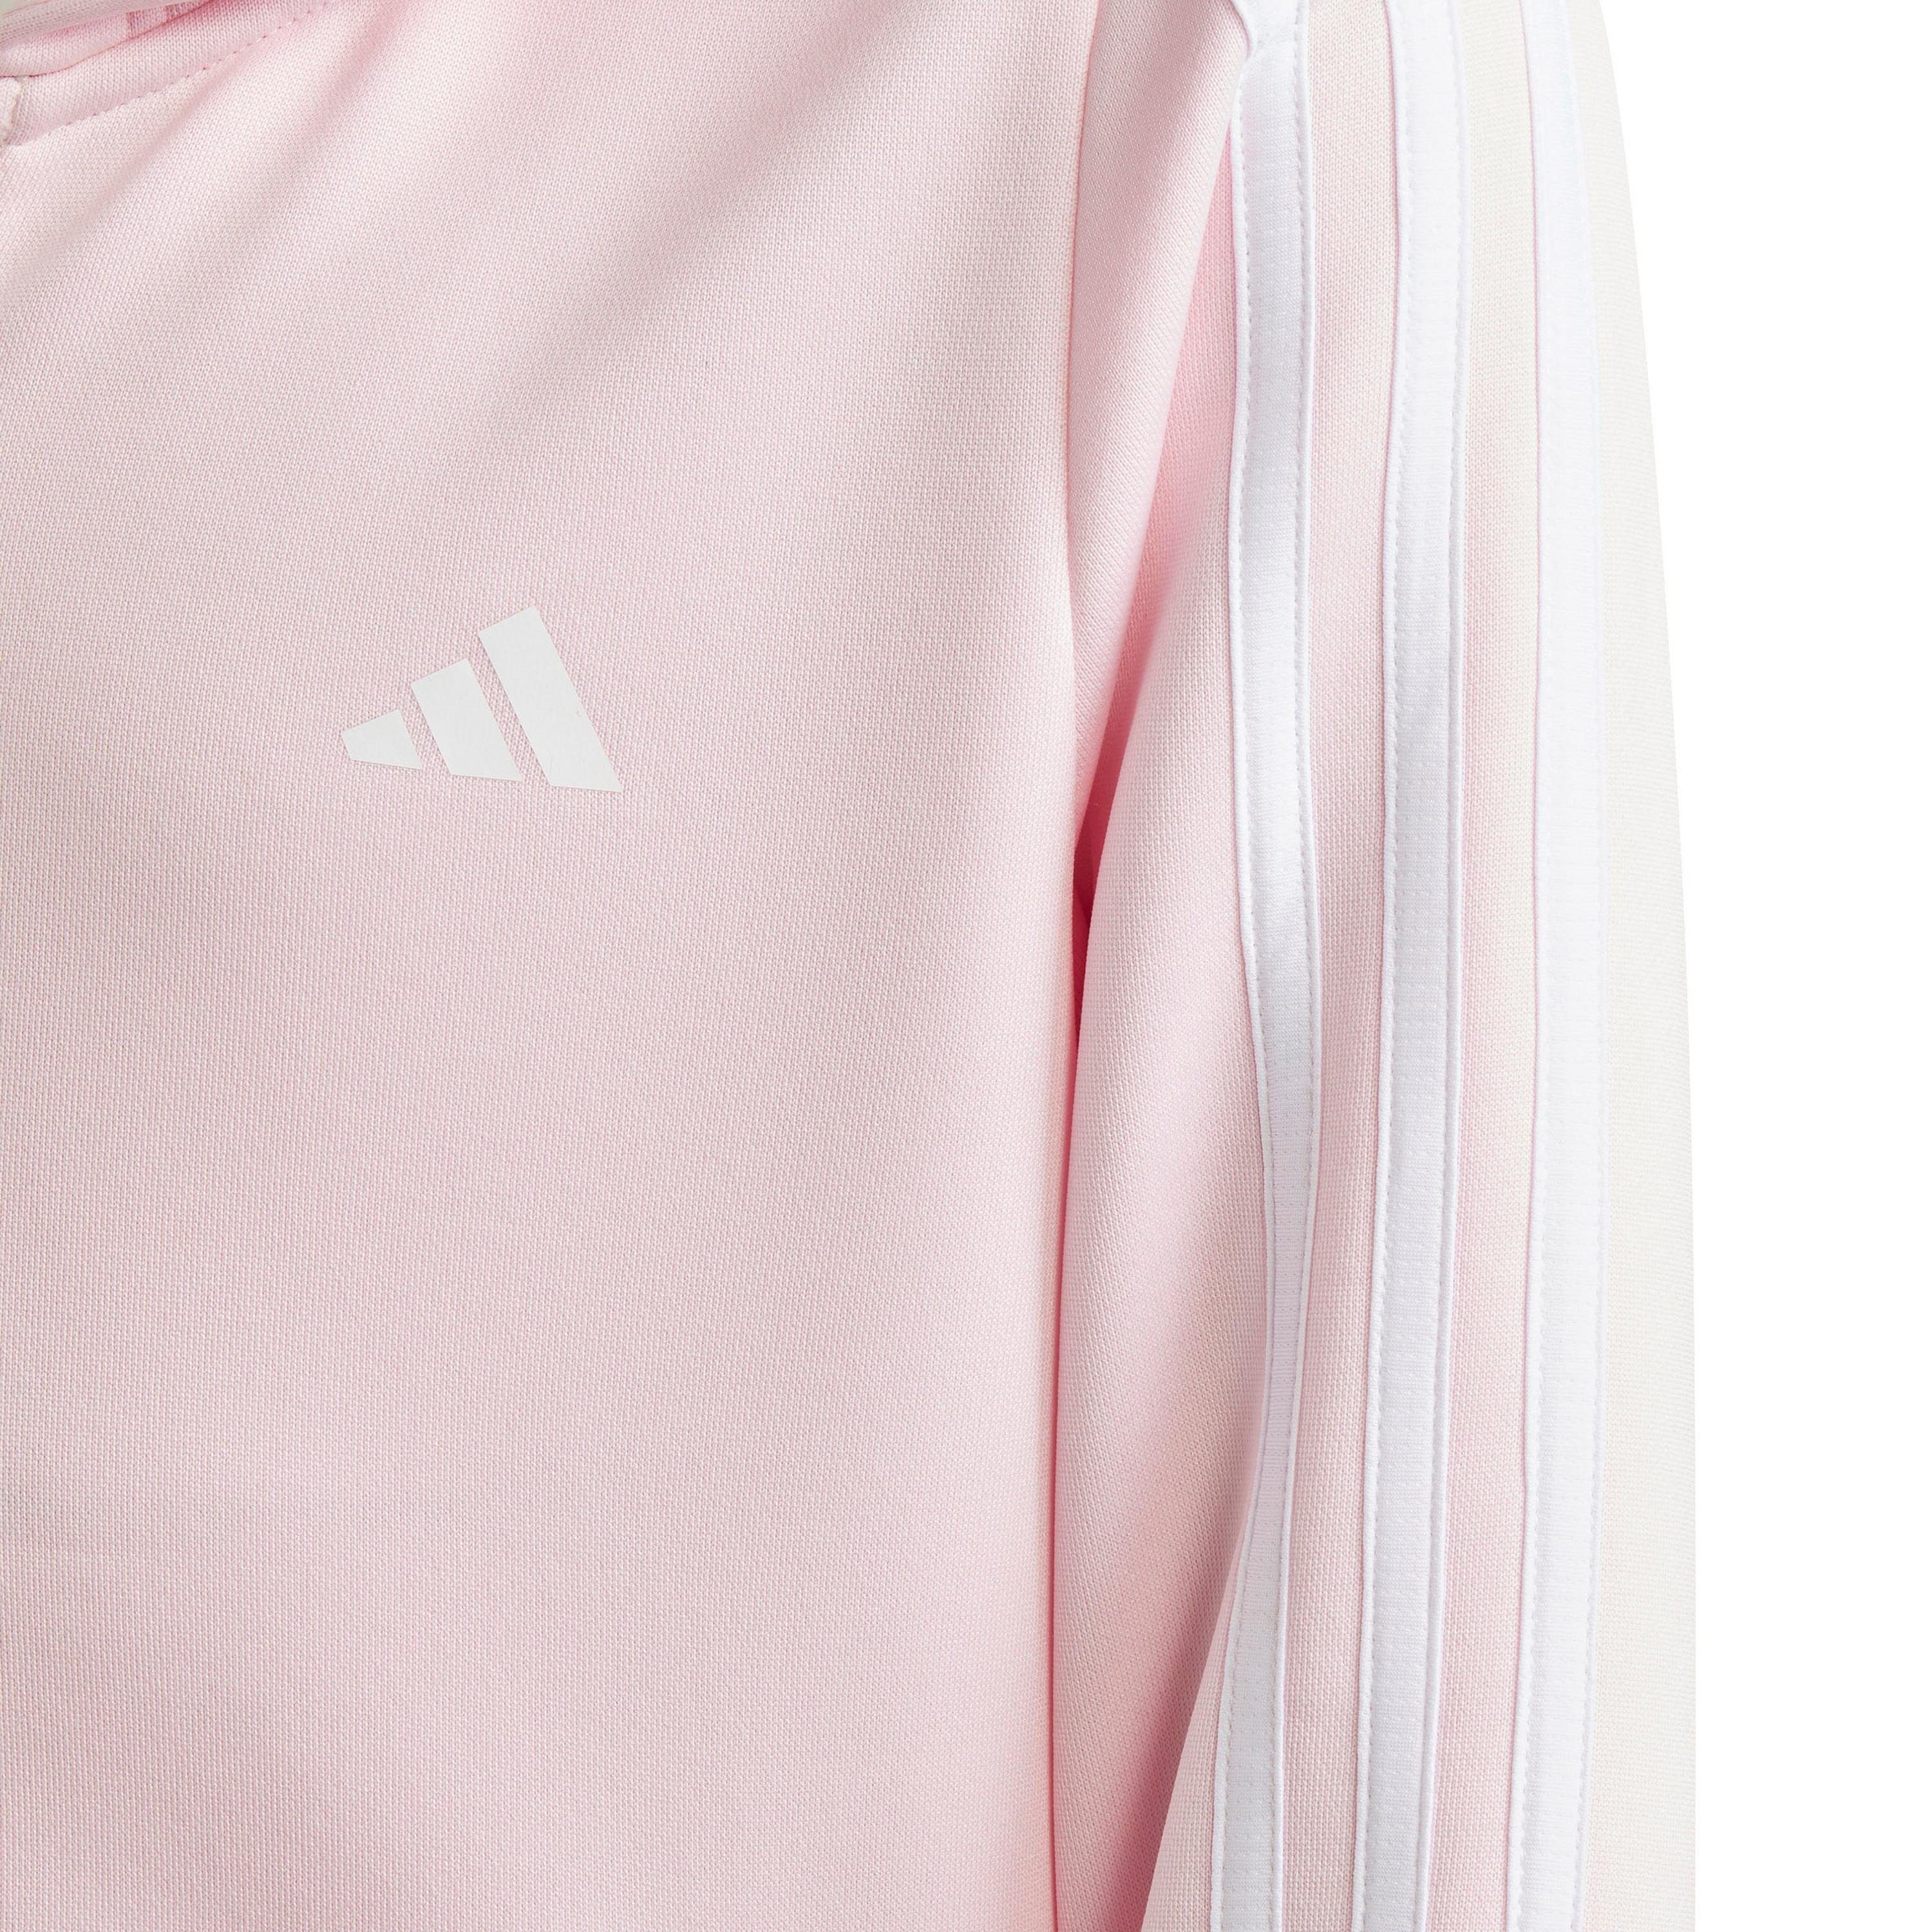 Trainingsjacke Performance adidas pink-white clear